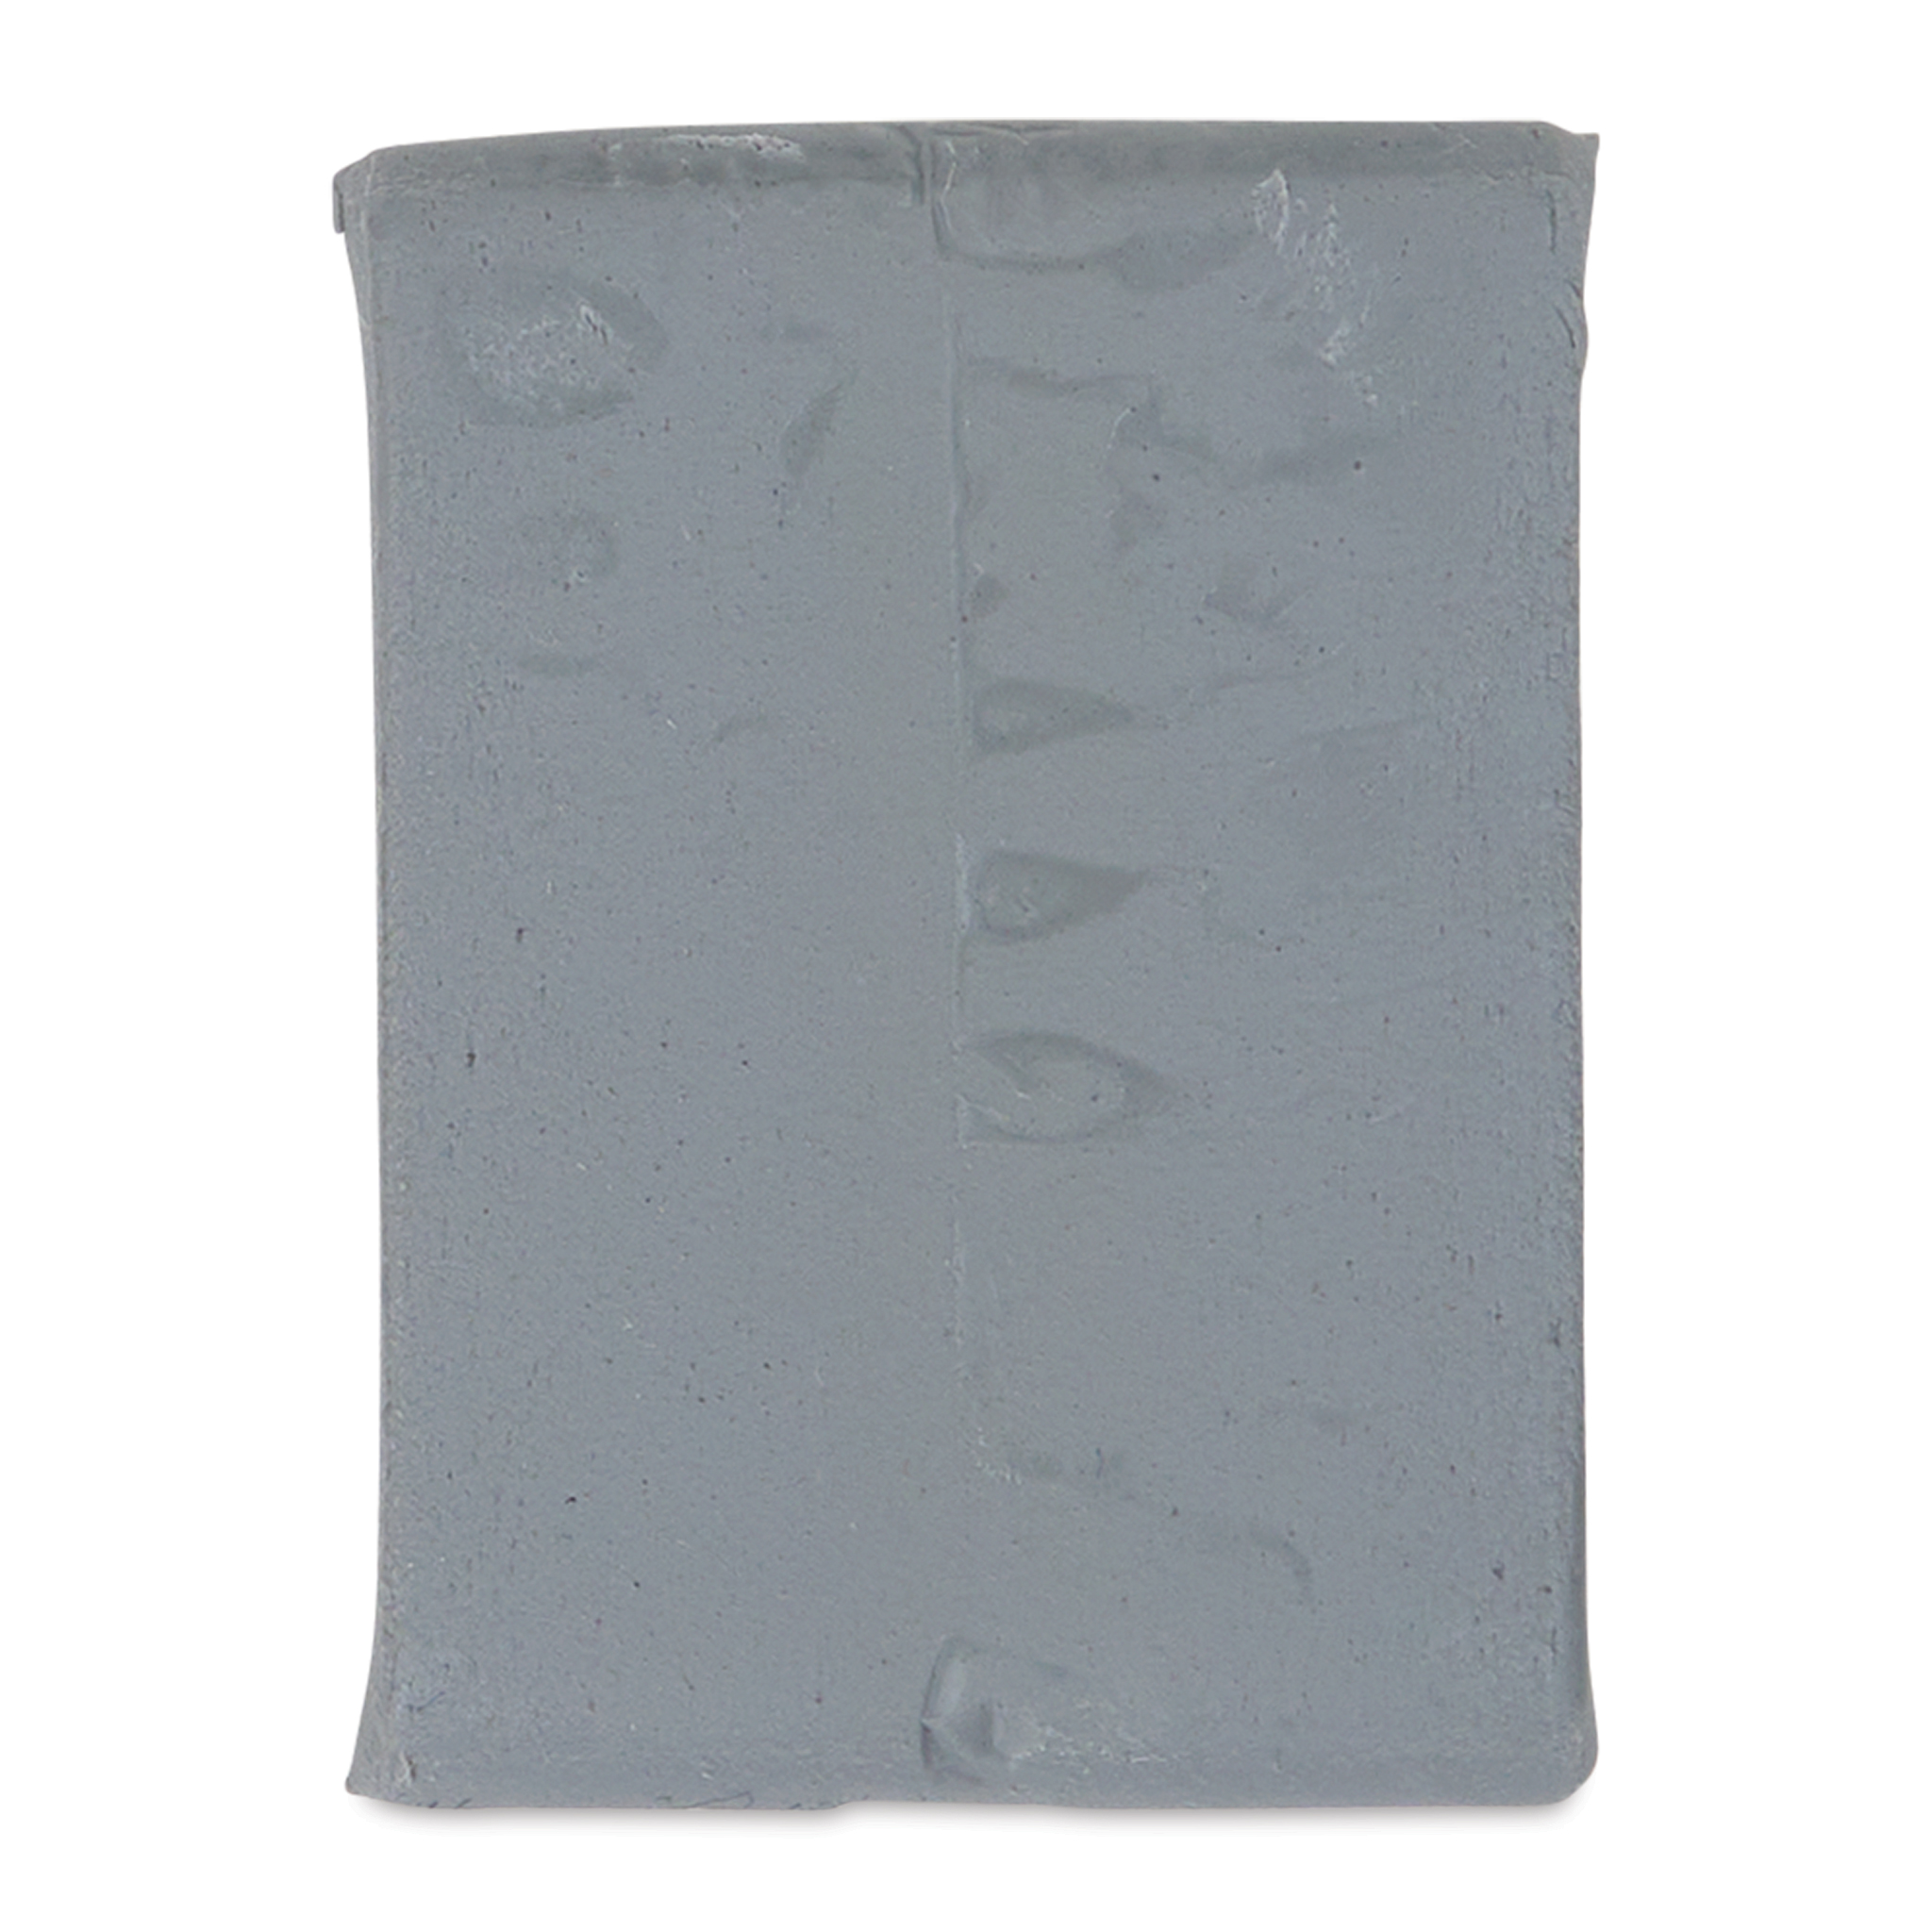 Blick Art Gum Eraser - Large, 2 x 1 x 1/2, Box of 12